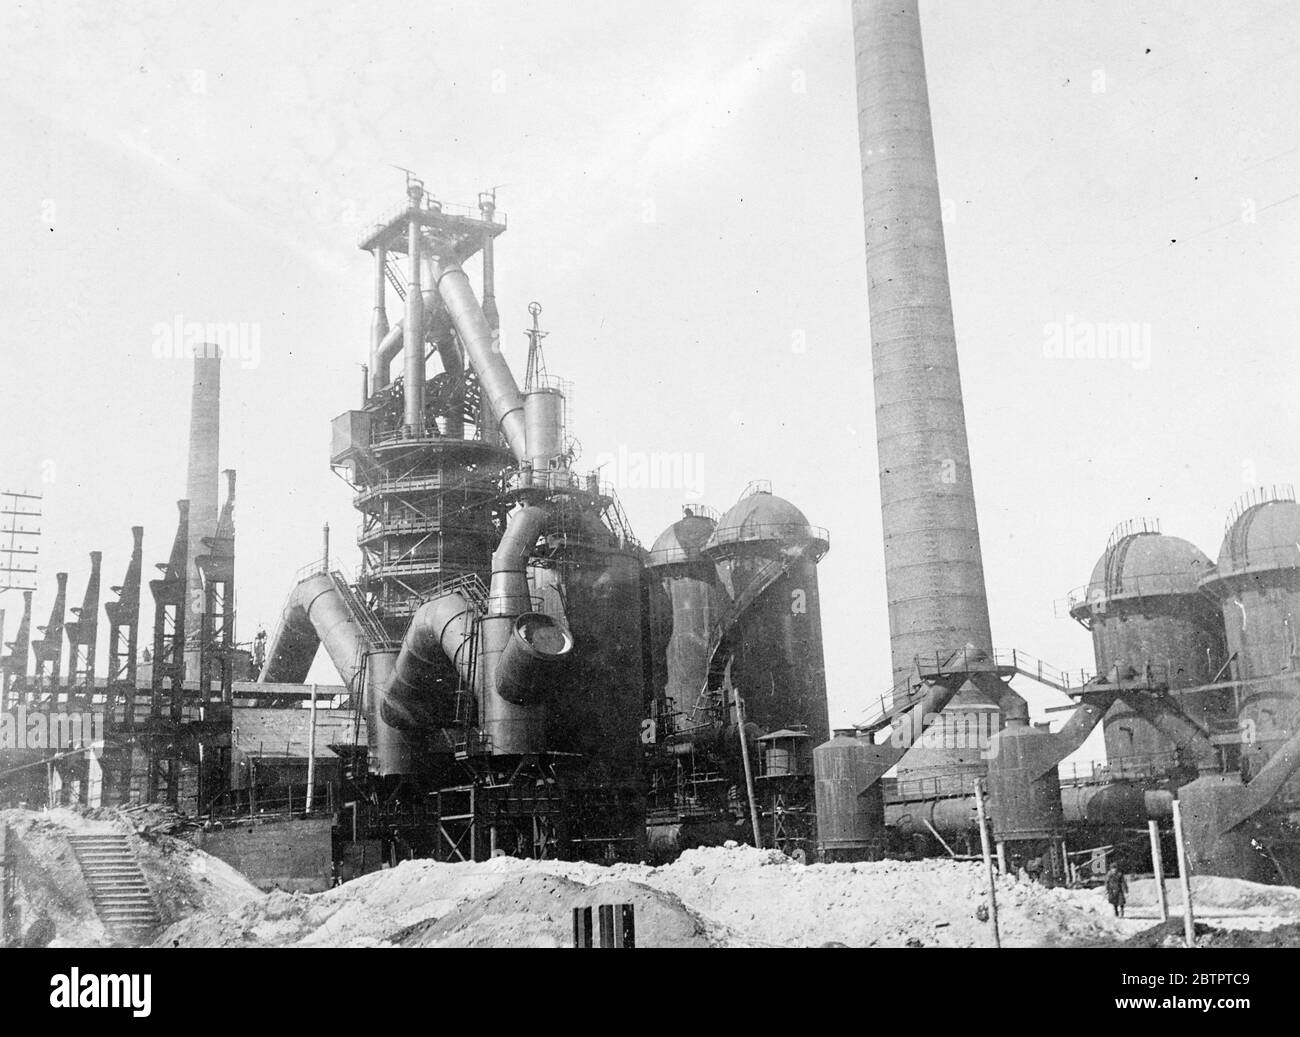 Soviet blast furnaces. One of the huge gigantic blast furnaces at Dnepropetrovsk, USSR. Stock Photo